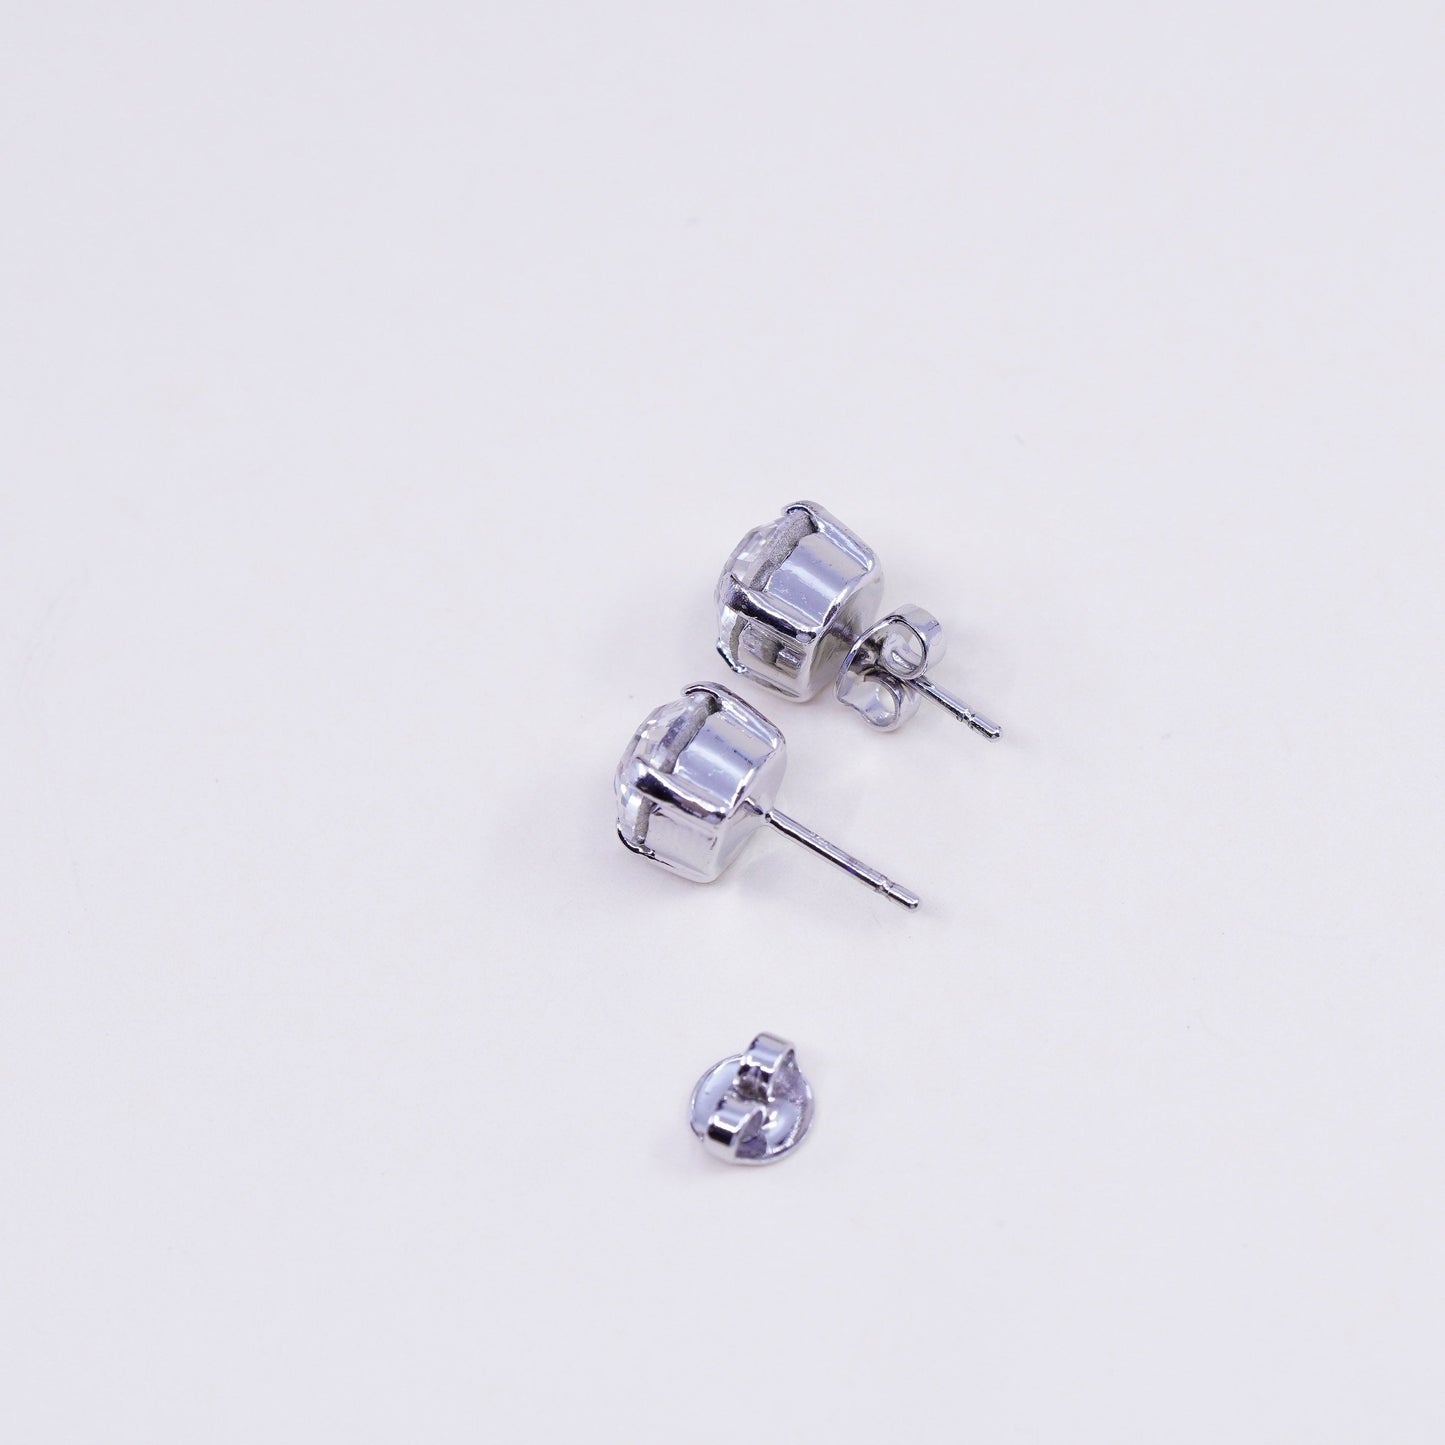 7mm, Vintage sterling 925 silver cz studs, fashion minimalist earrings